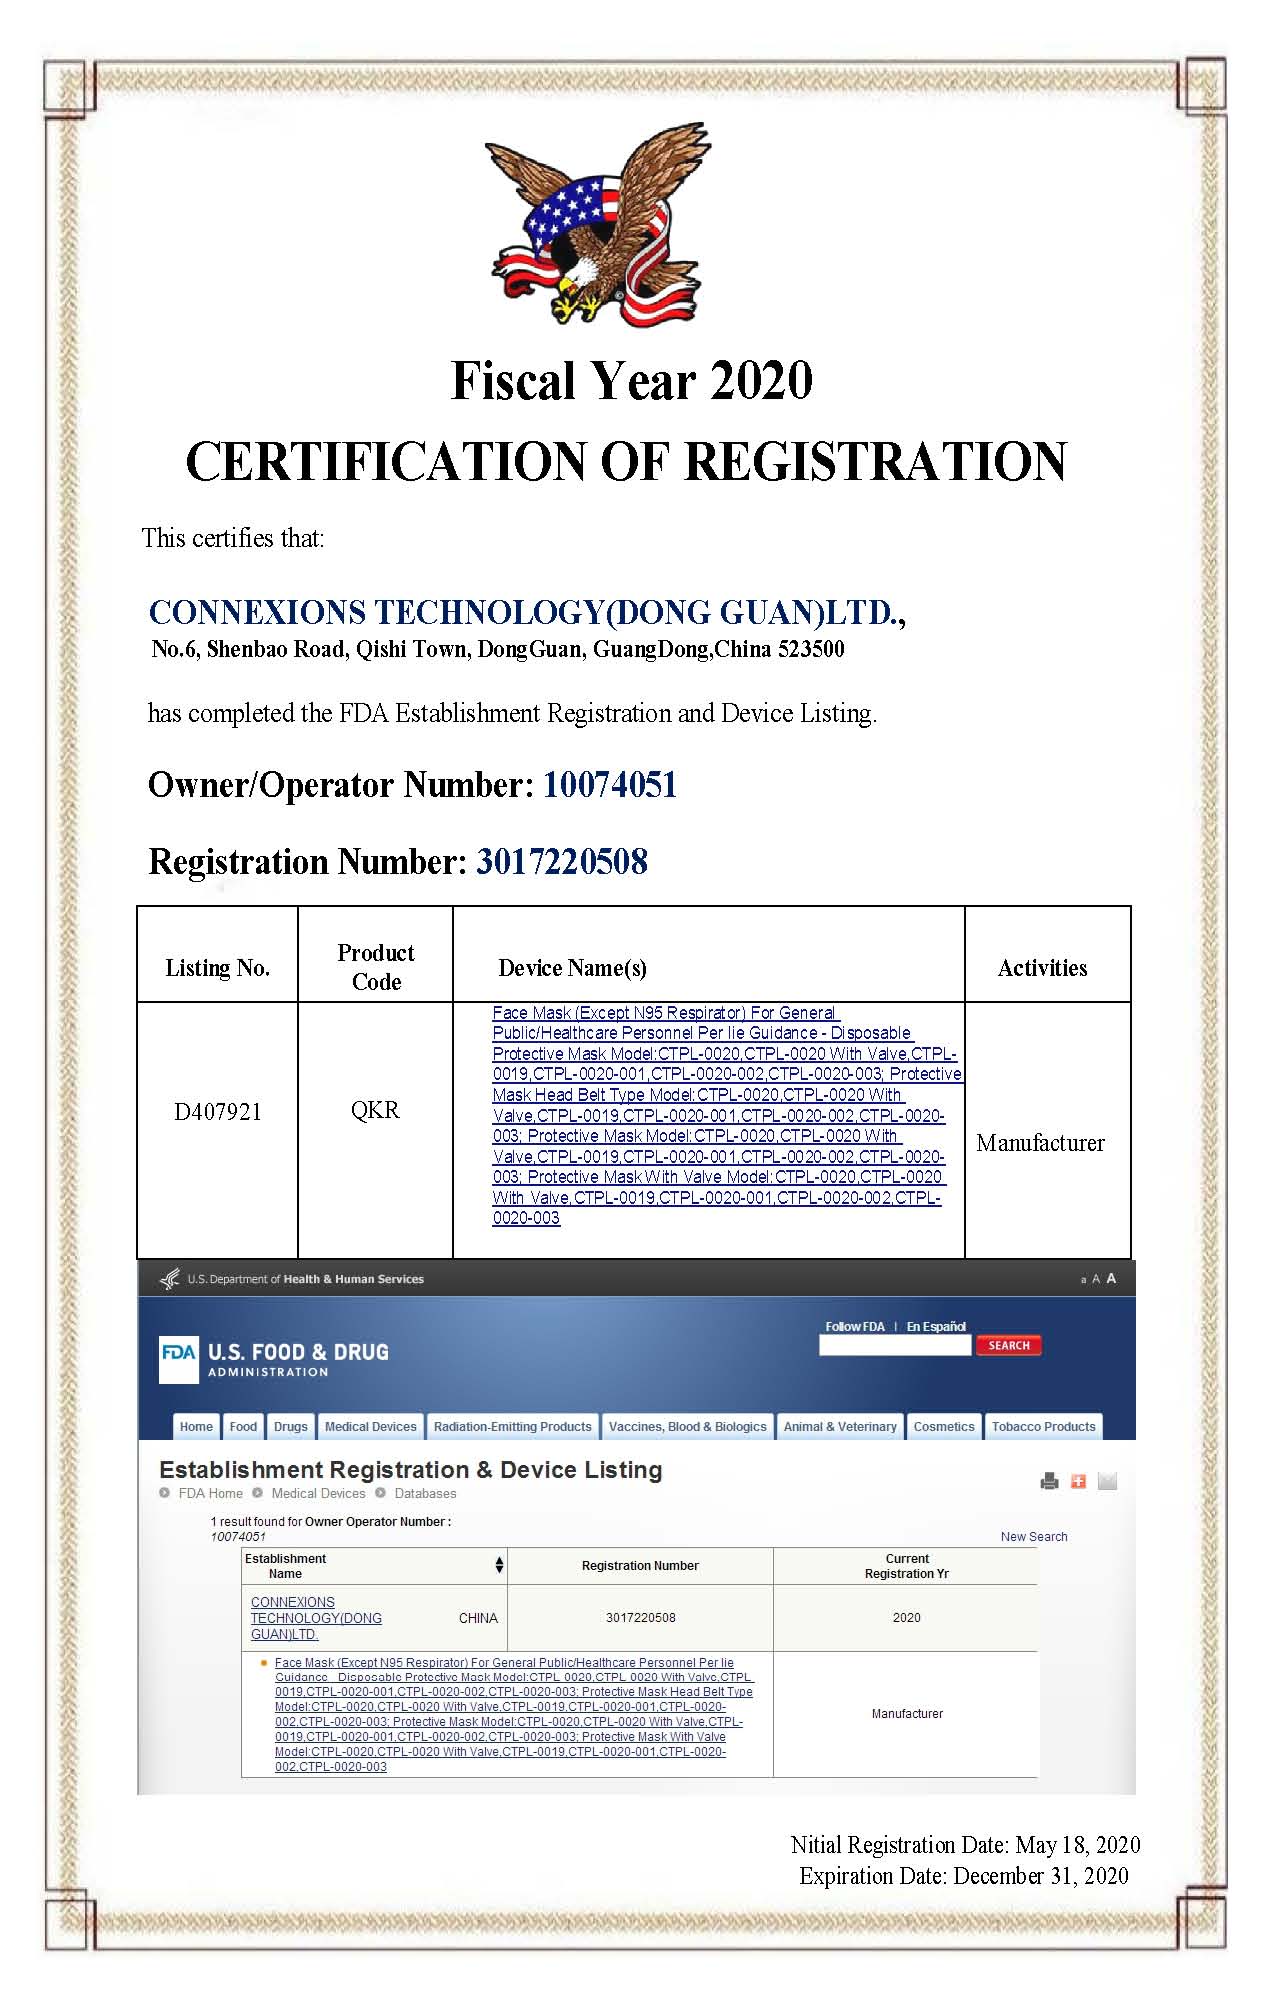 Congratulations FDA Registraion Number 3017220508  released on September 1st. 2020